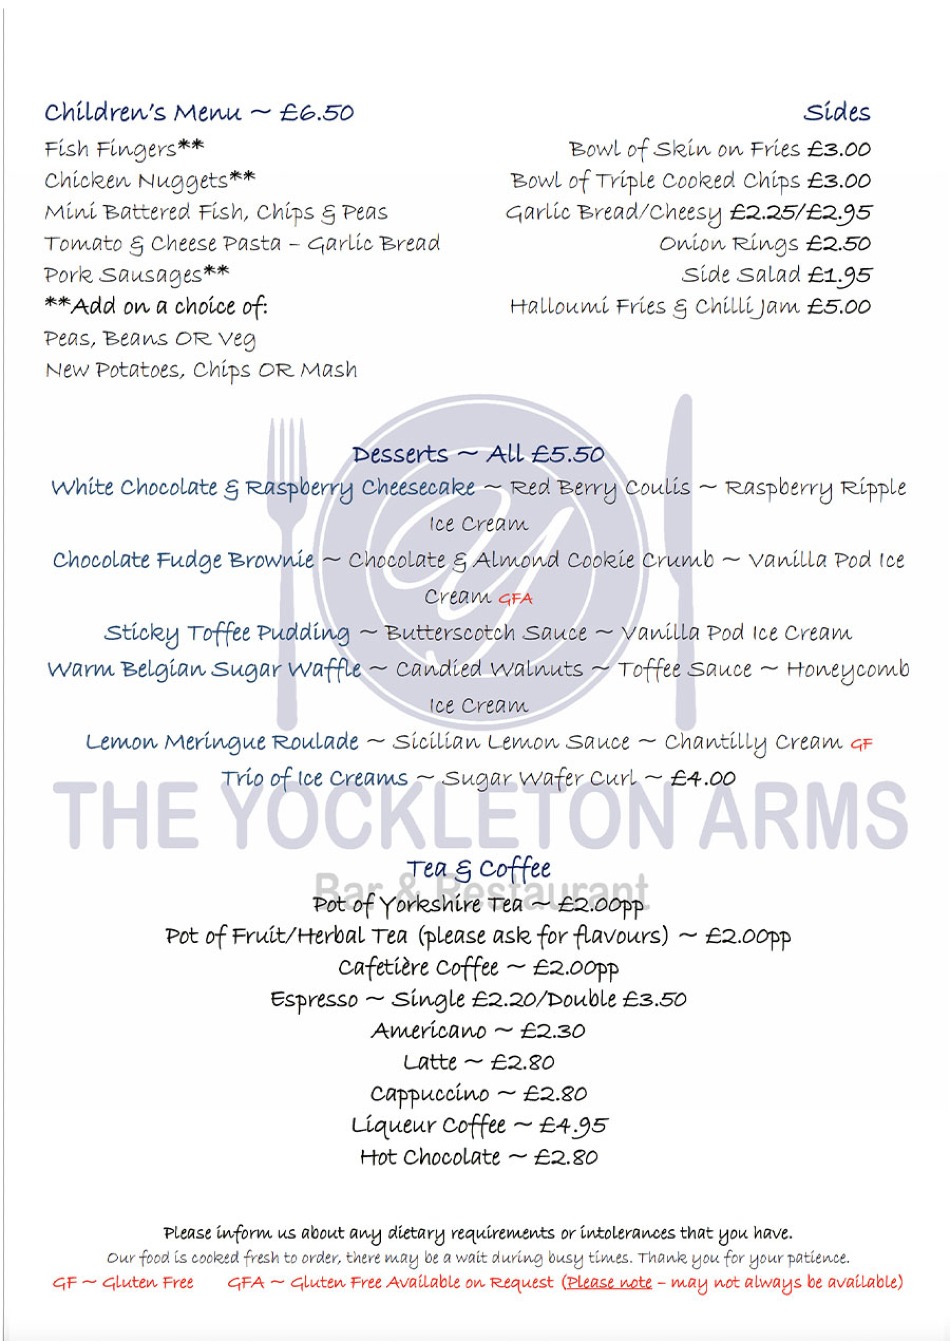 Takeaway Restaurant Menu Page - The Yockleton Arms Shrewsbury - Shrewsbury